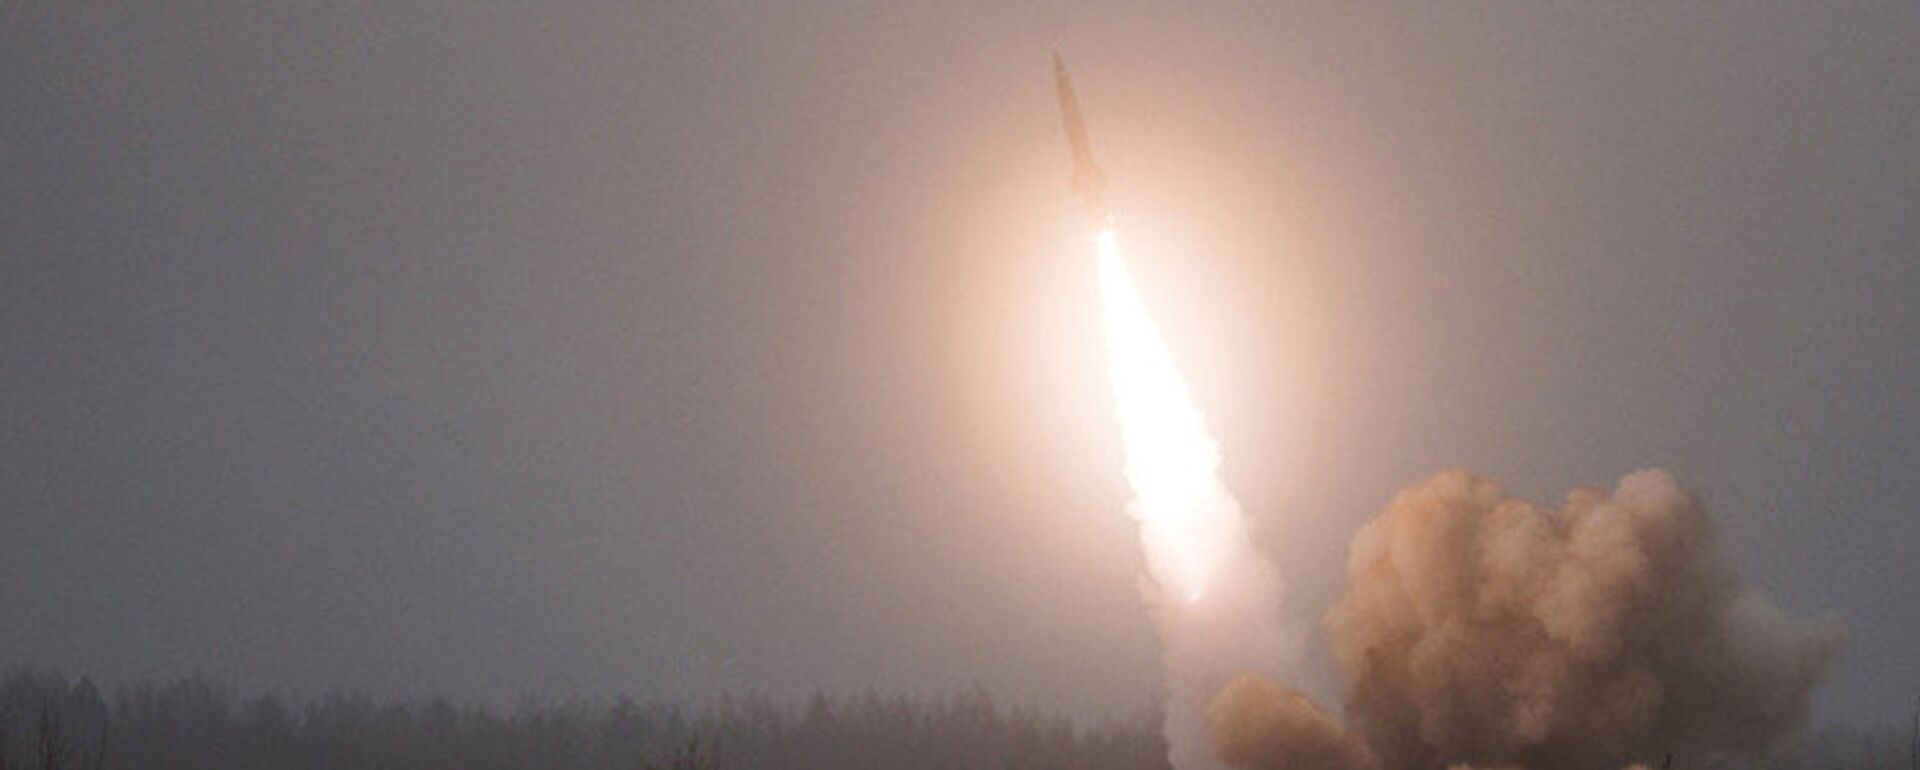 روسيا تختبر صاروخ تسيركون  - سبوتنيك عربي, 1920, 04.10.2021